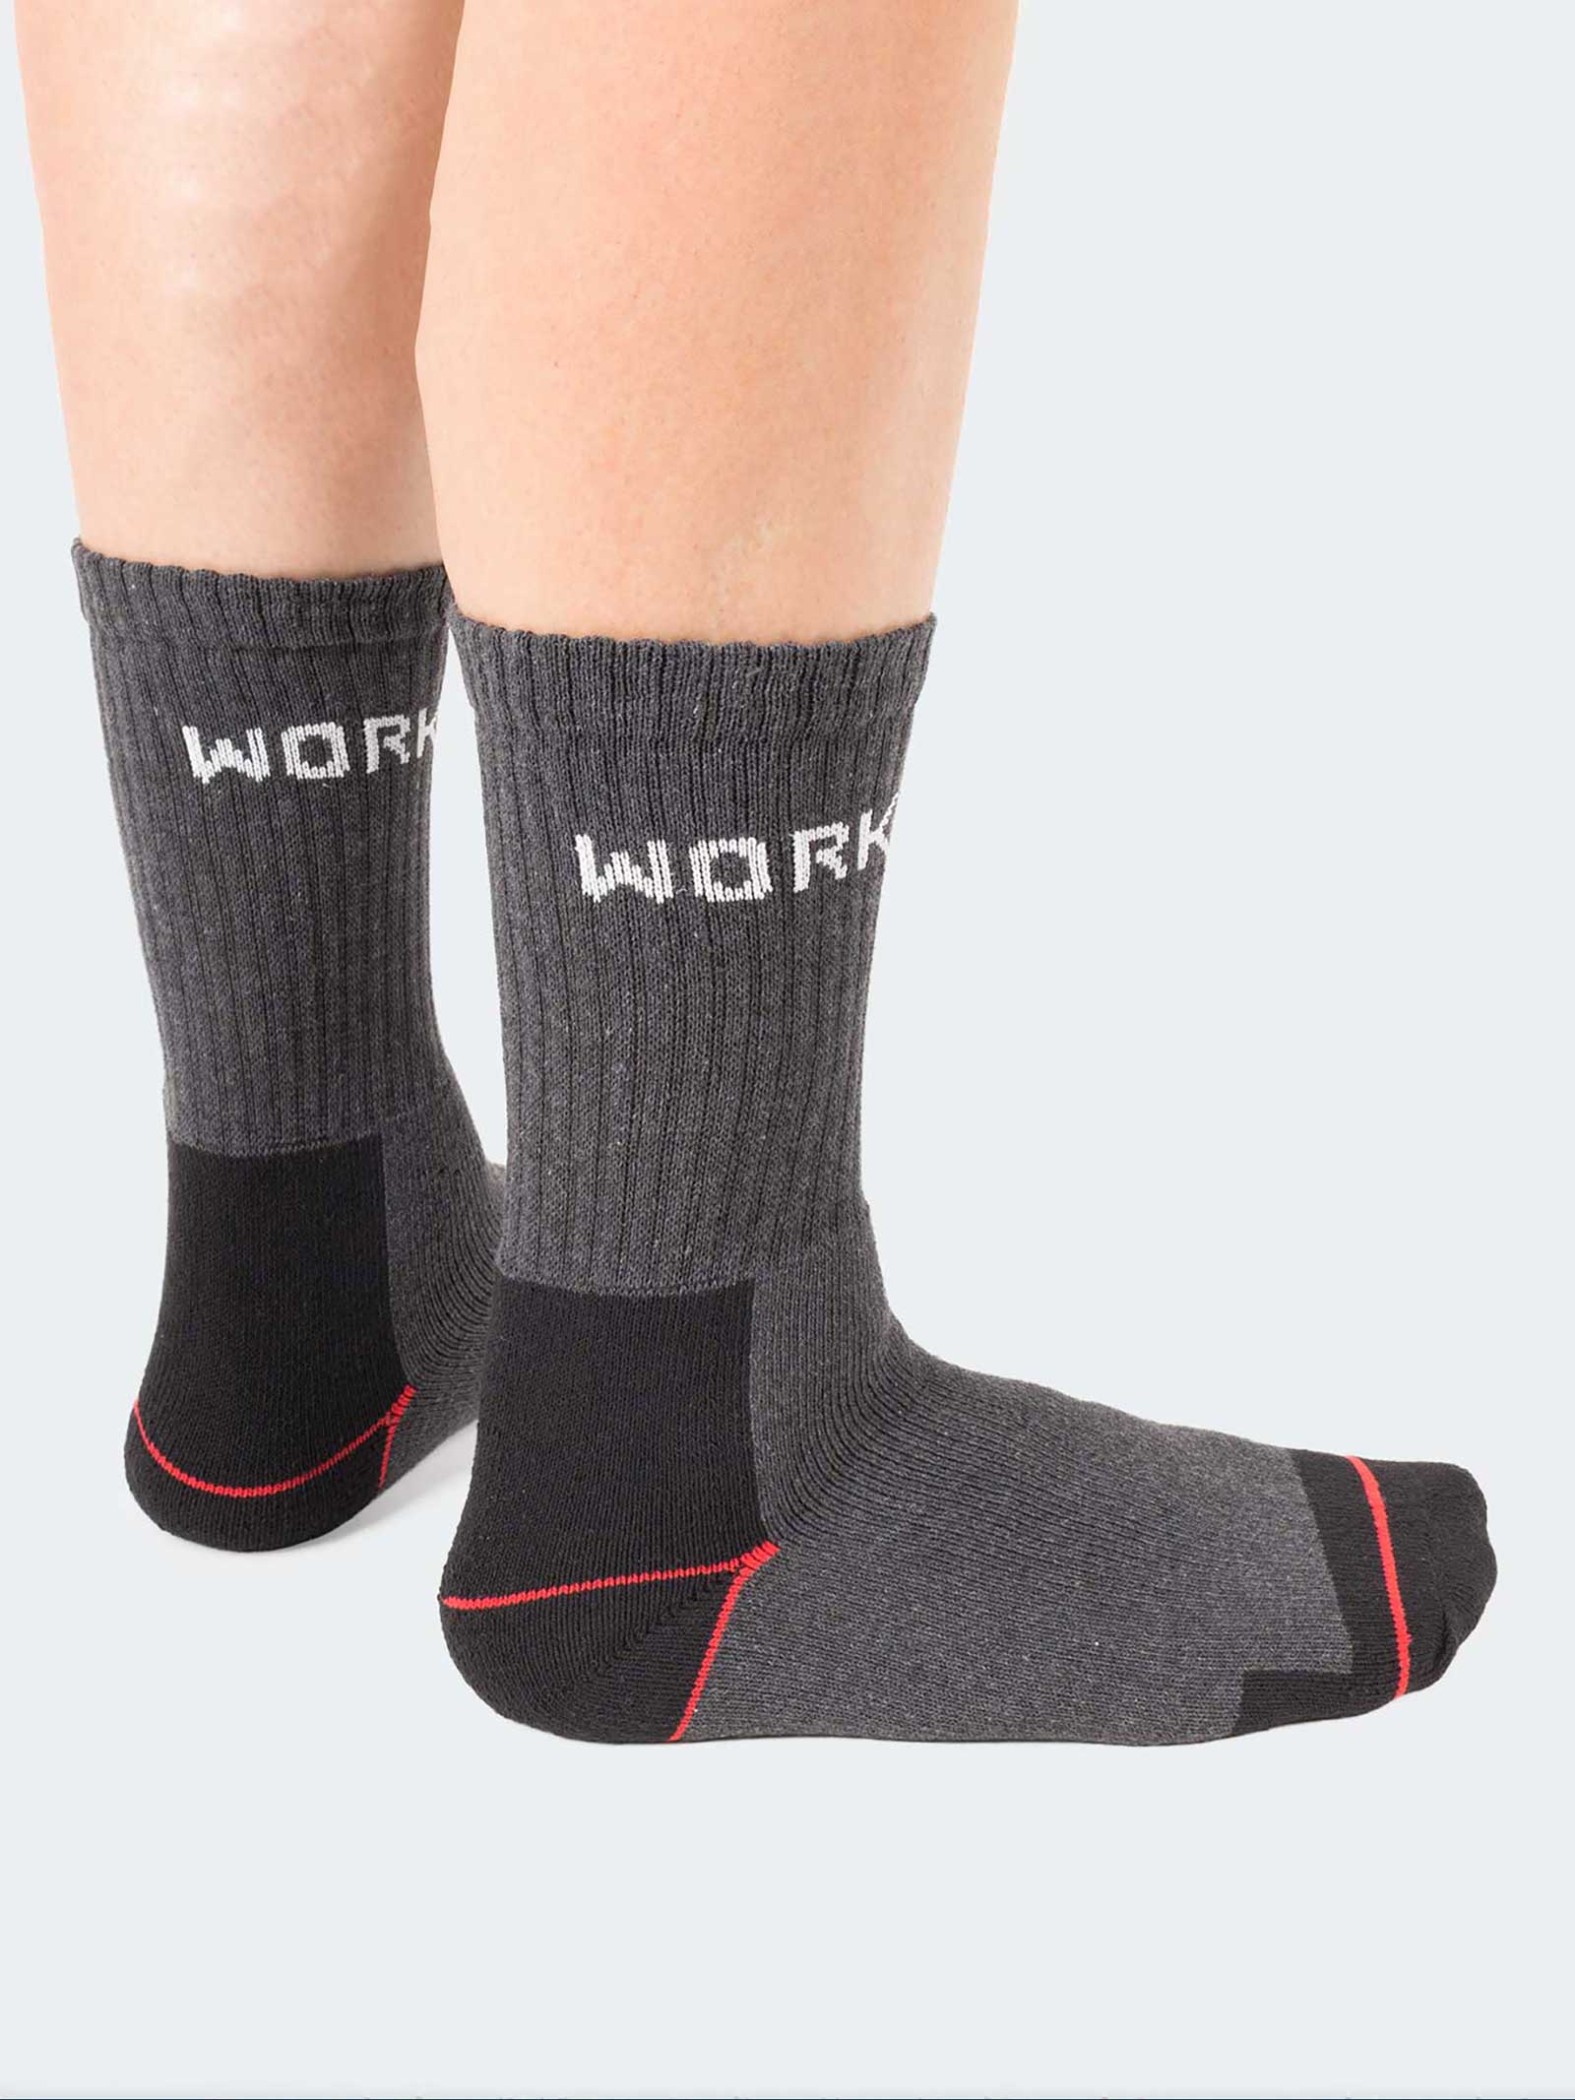 Three Men's Short Calf Socks, Baumwolle und Frottee - verstärkt